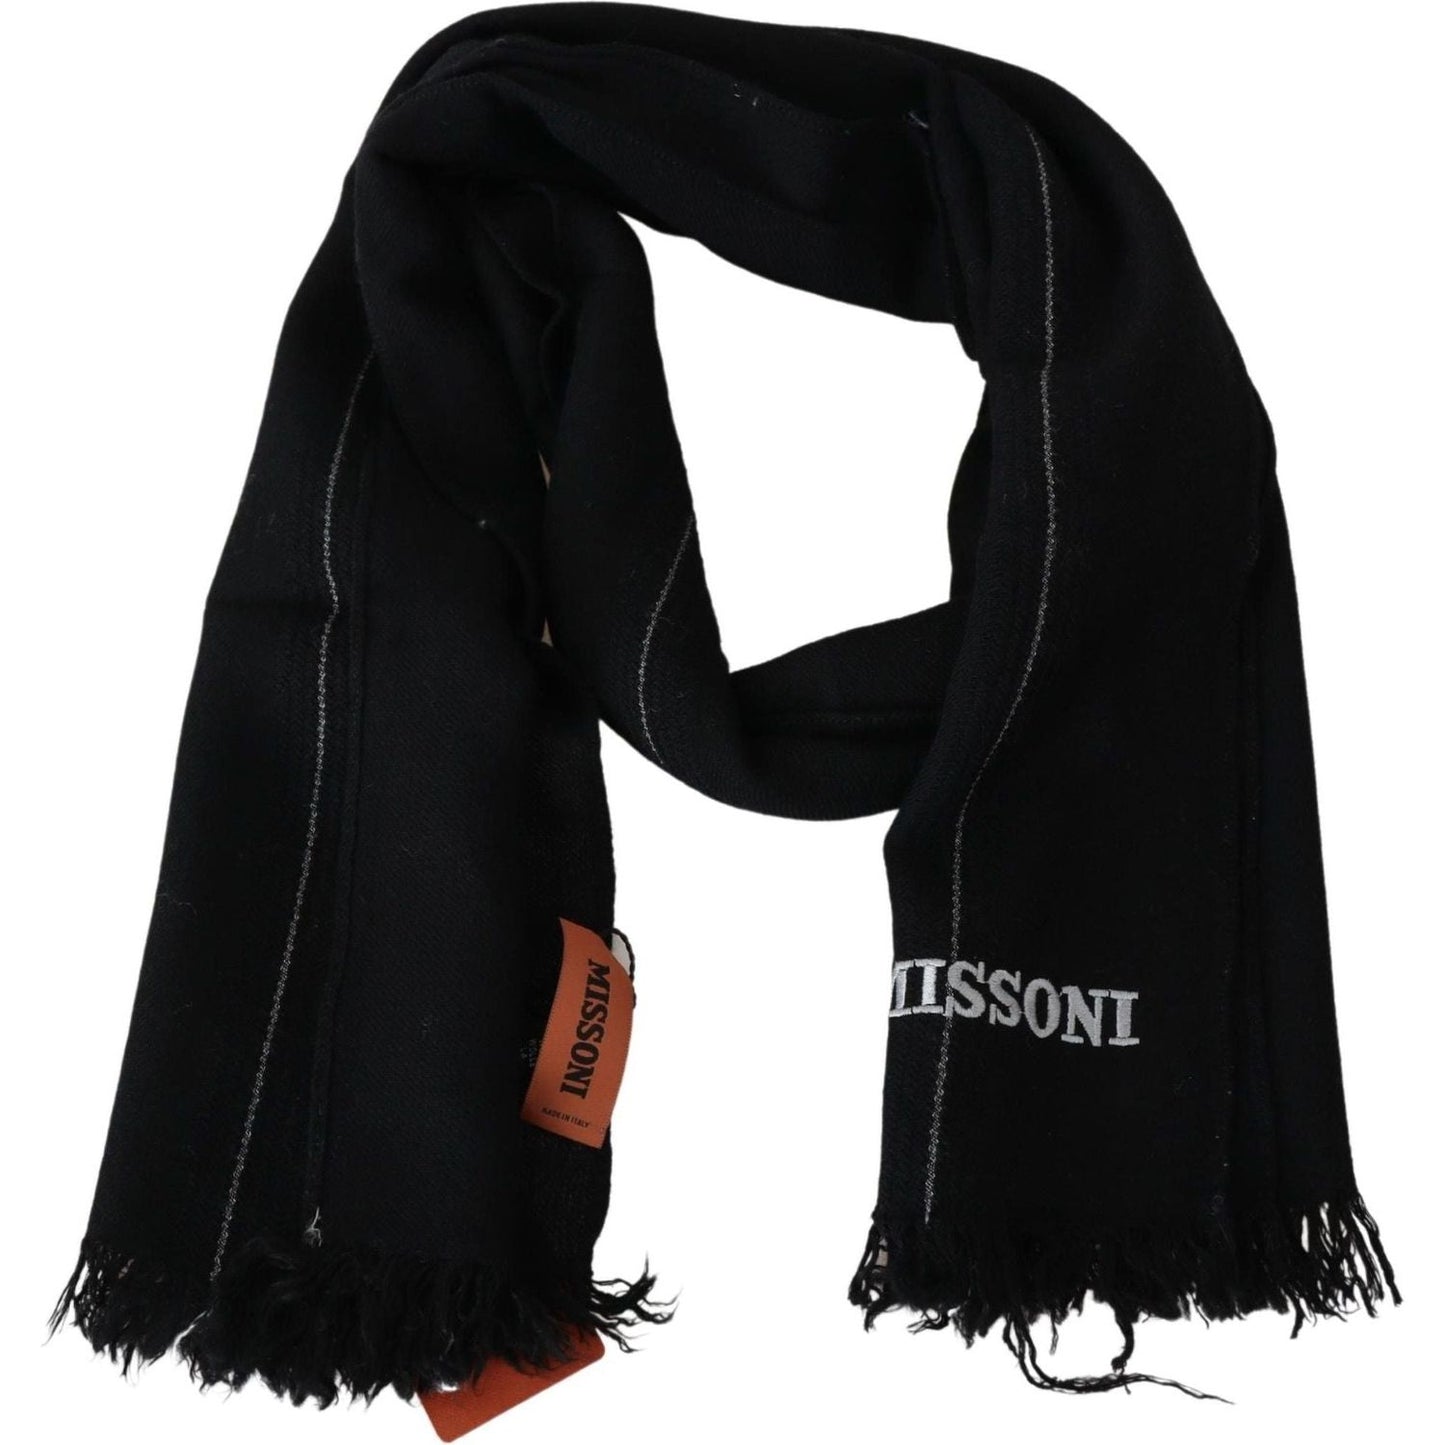 Missoni Elegant Black Wool Scarf with Logo Embroidery black-100-wool-unisex-neck-wrap-shawl-fringes-scarf